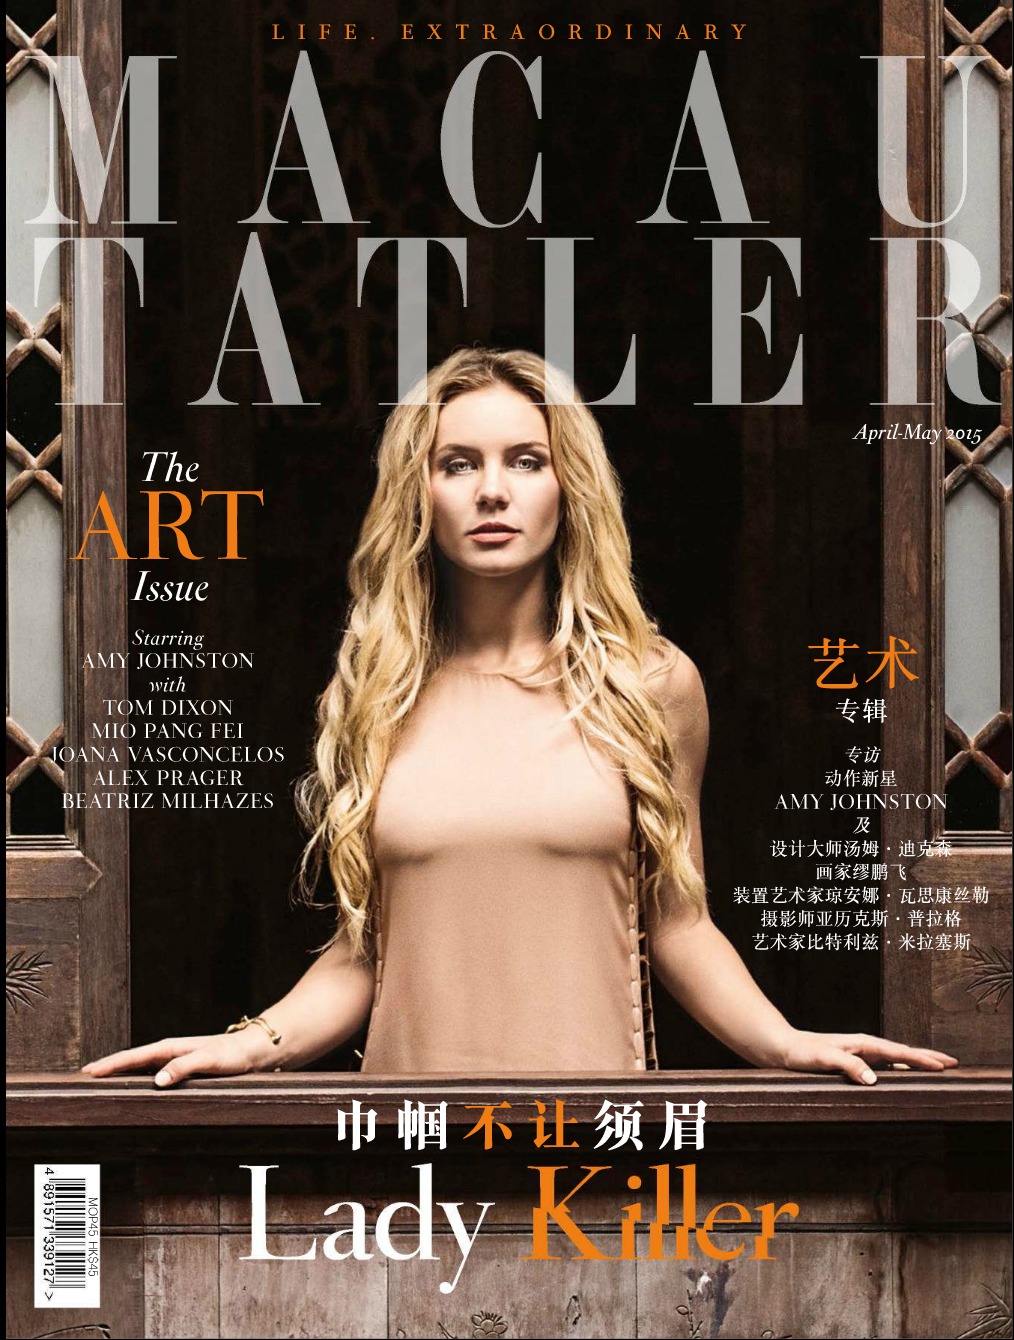 Amy Johnston in Macau Tatler Magazine April/May issue